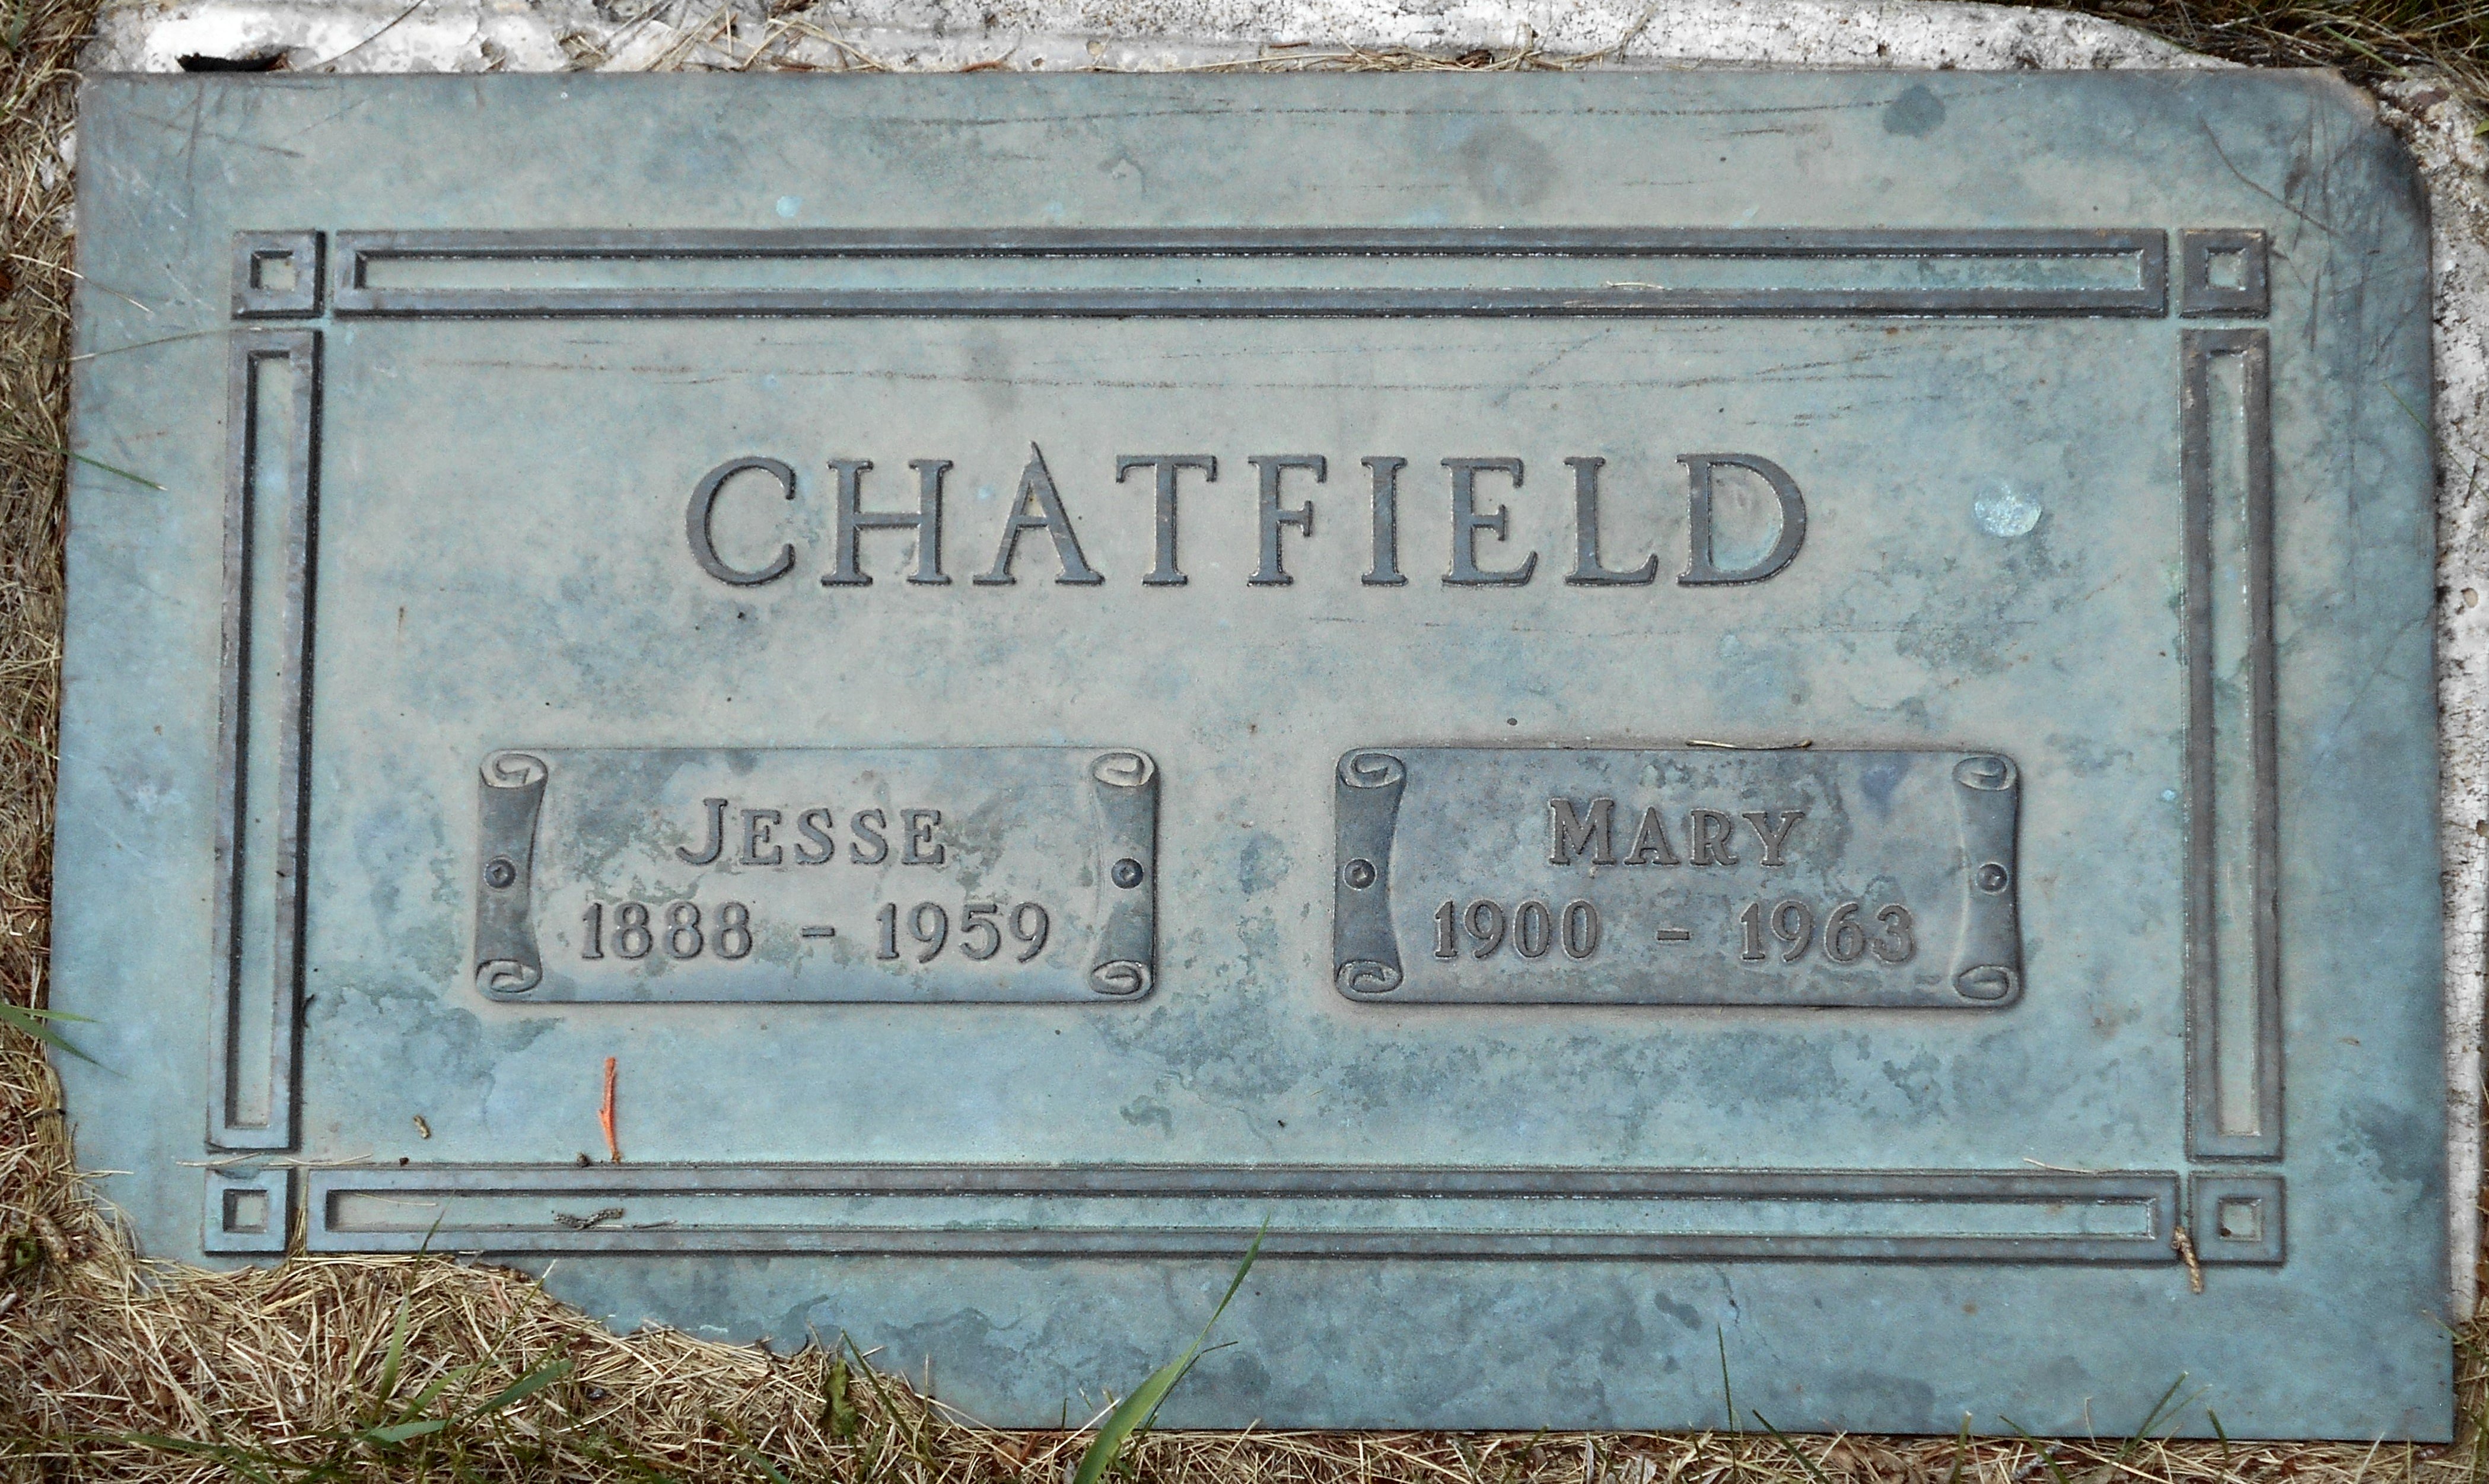 CHATFIELD Jesse 1888-1959 grave.jpg